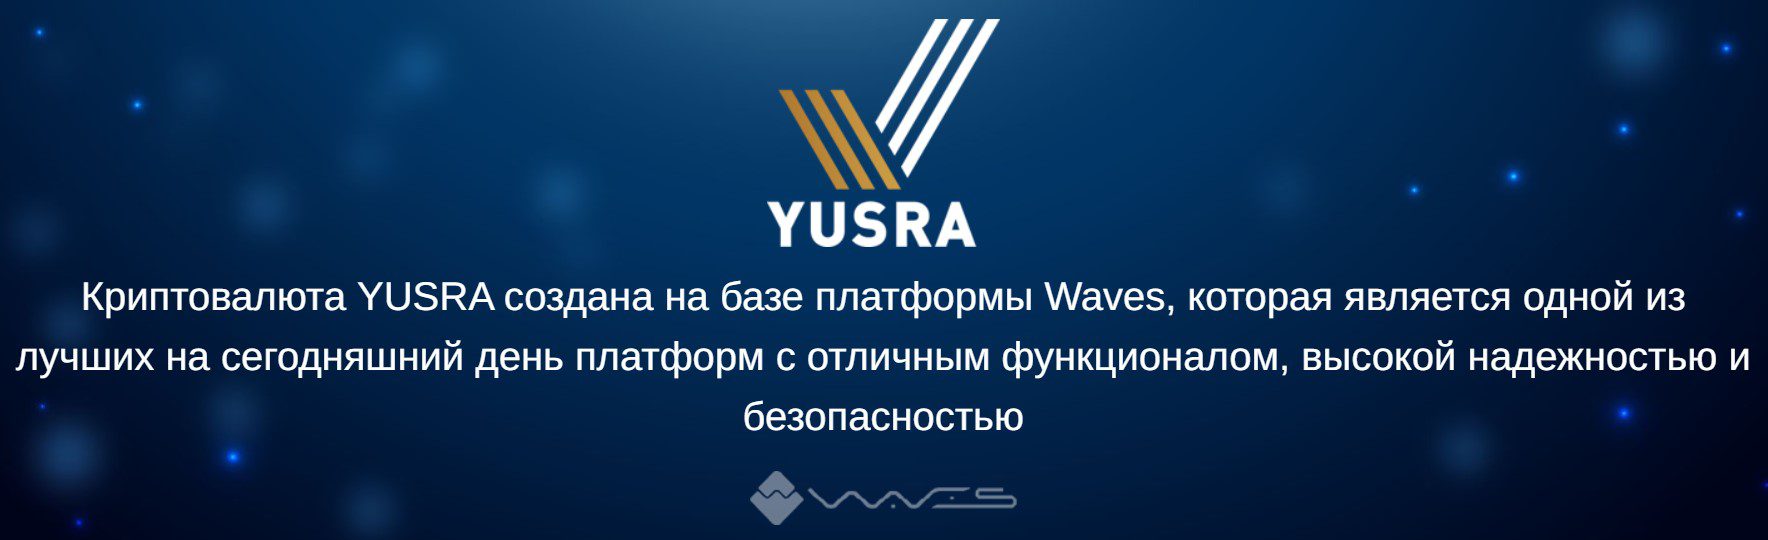 Криптовалюта Yusra Global